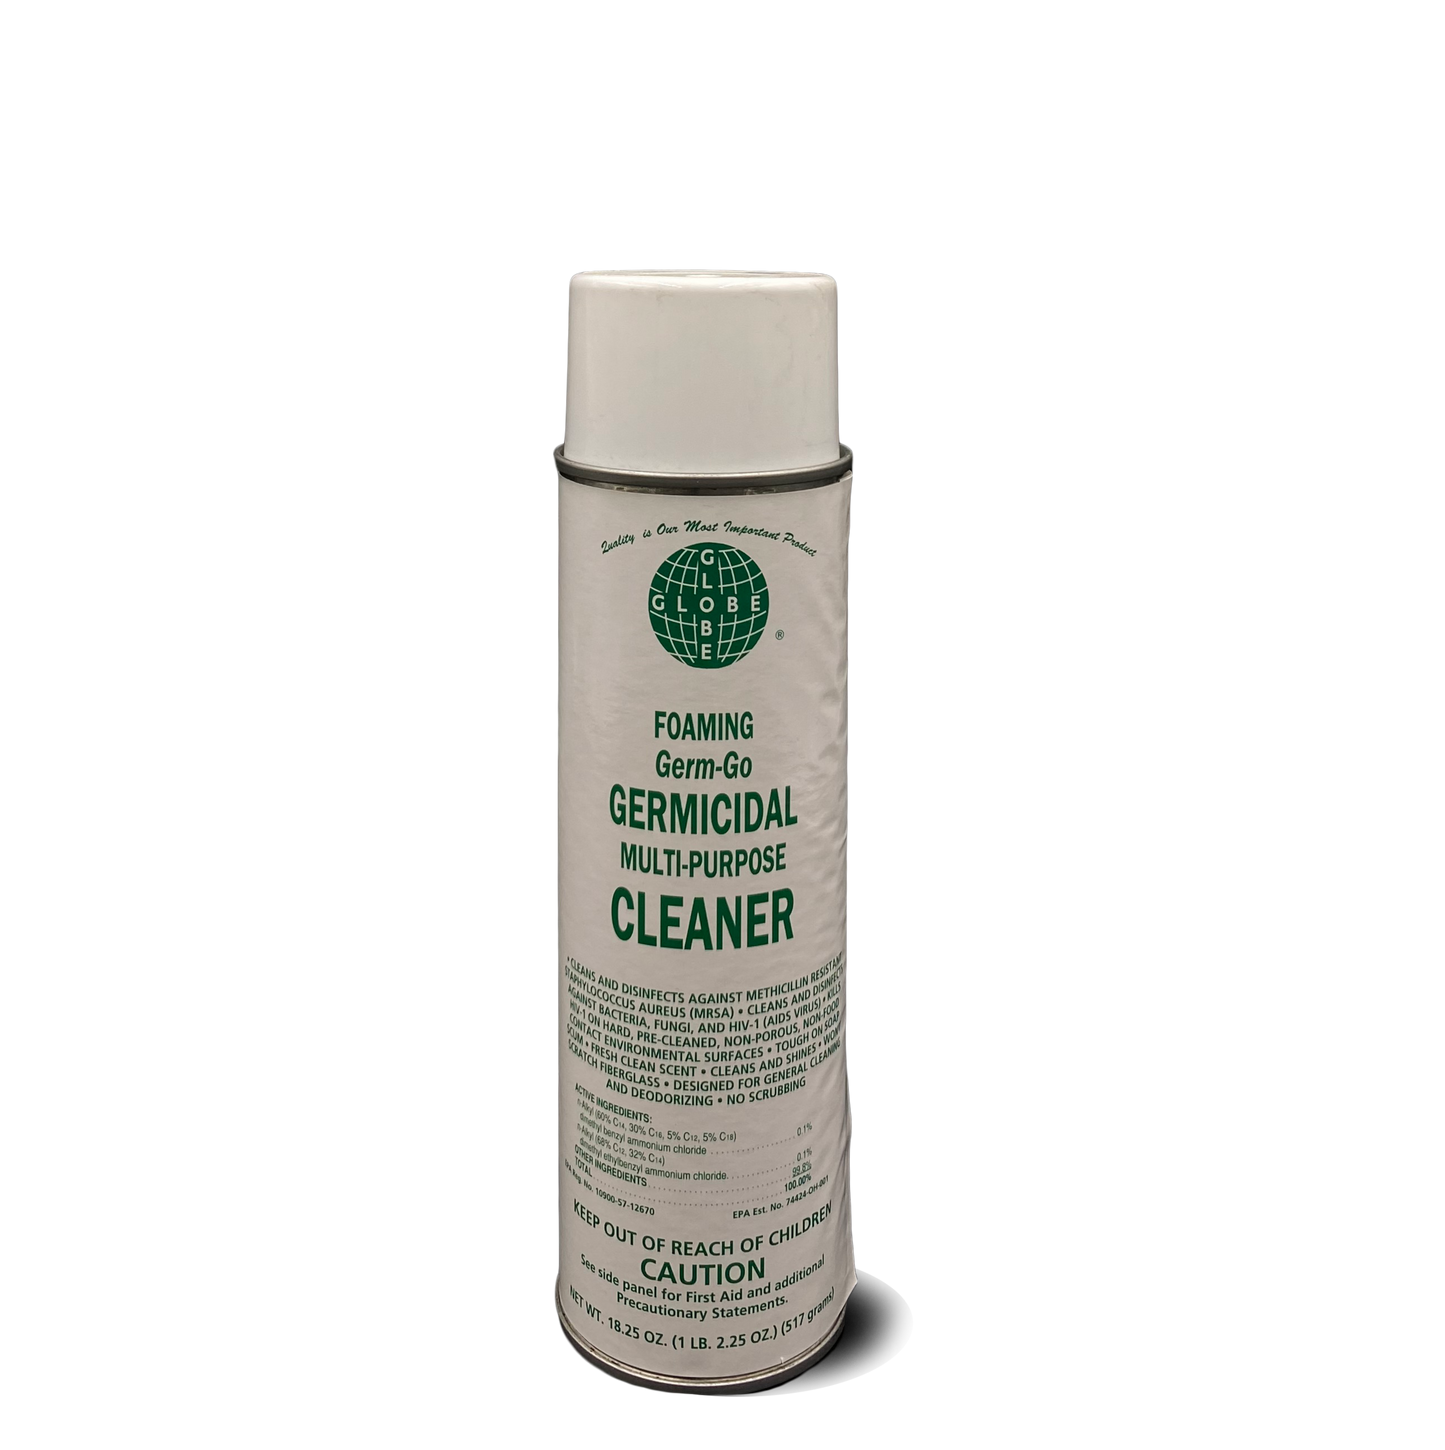 Foaming Germ-Go Germicidal Multi-Purpose Cleaner